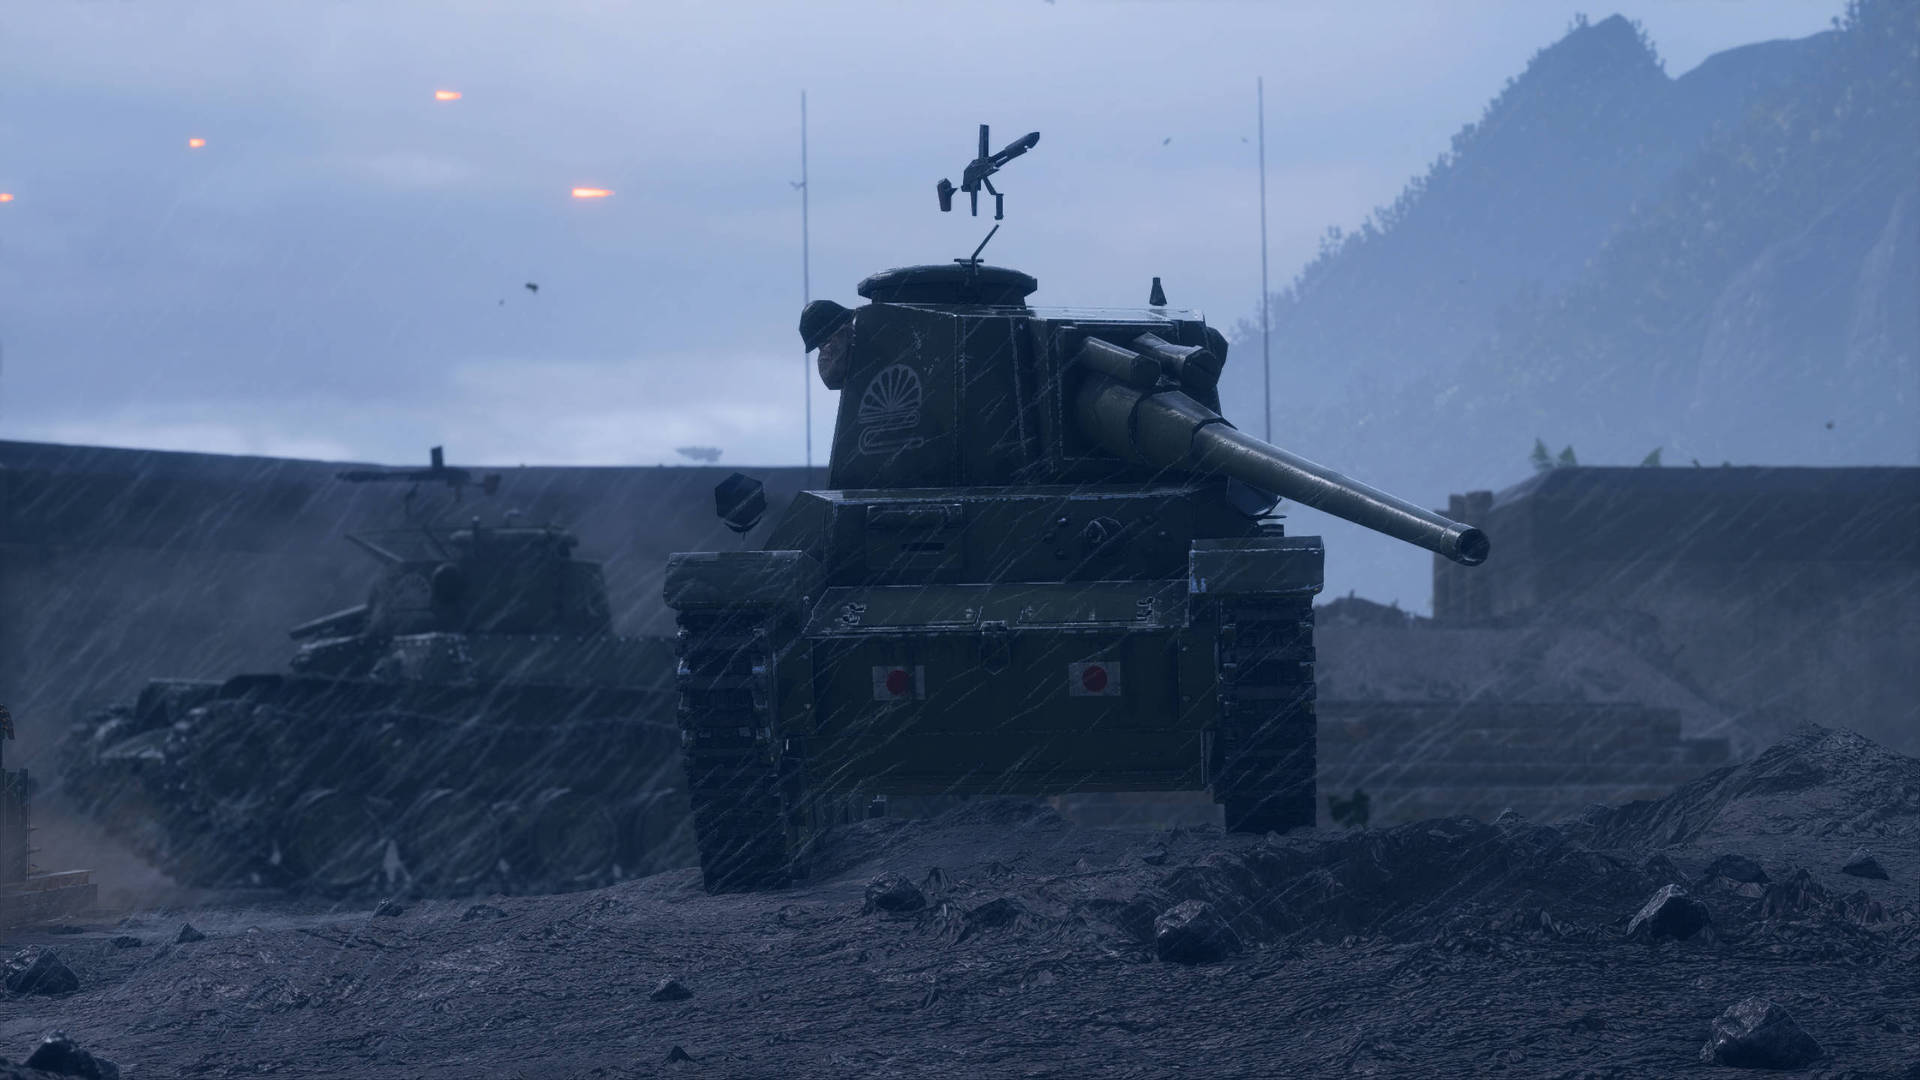 Battlefield 1 Hd Image Of Tanks Background